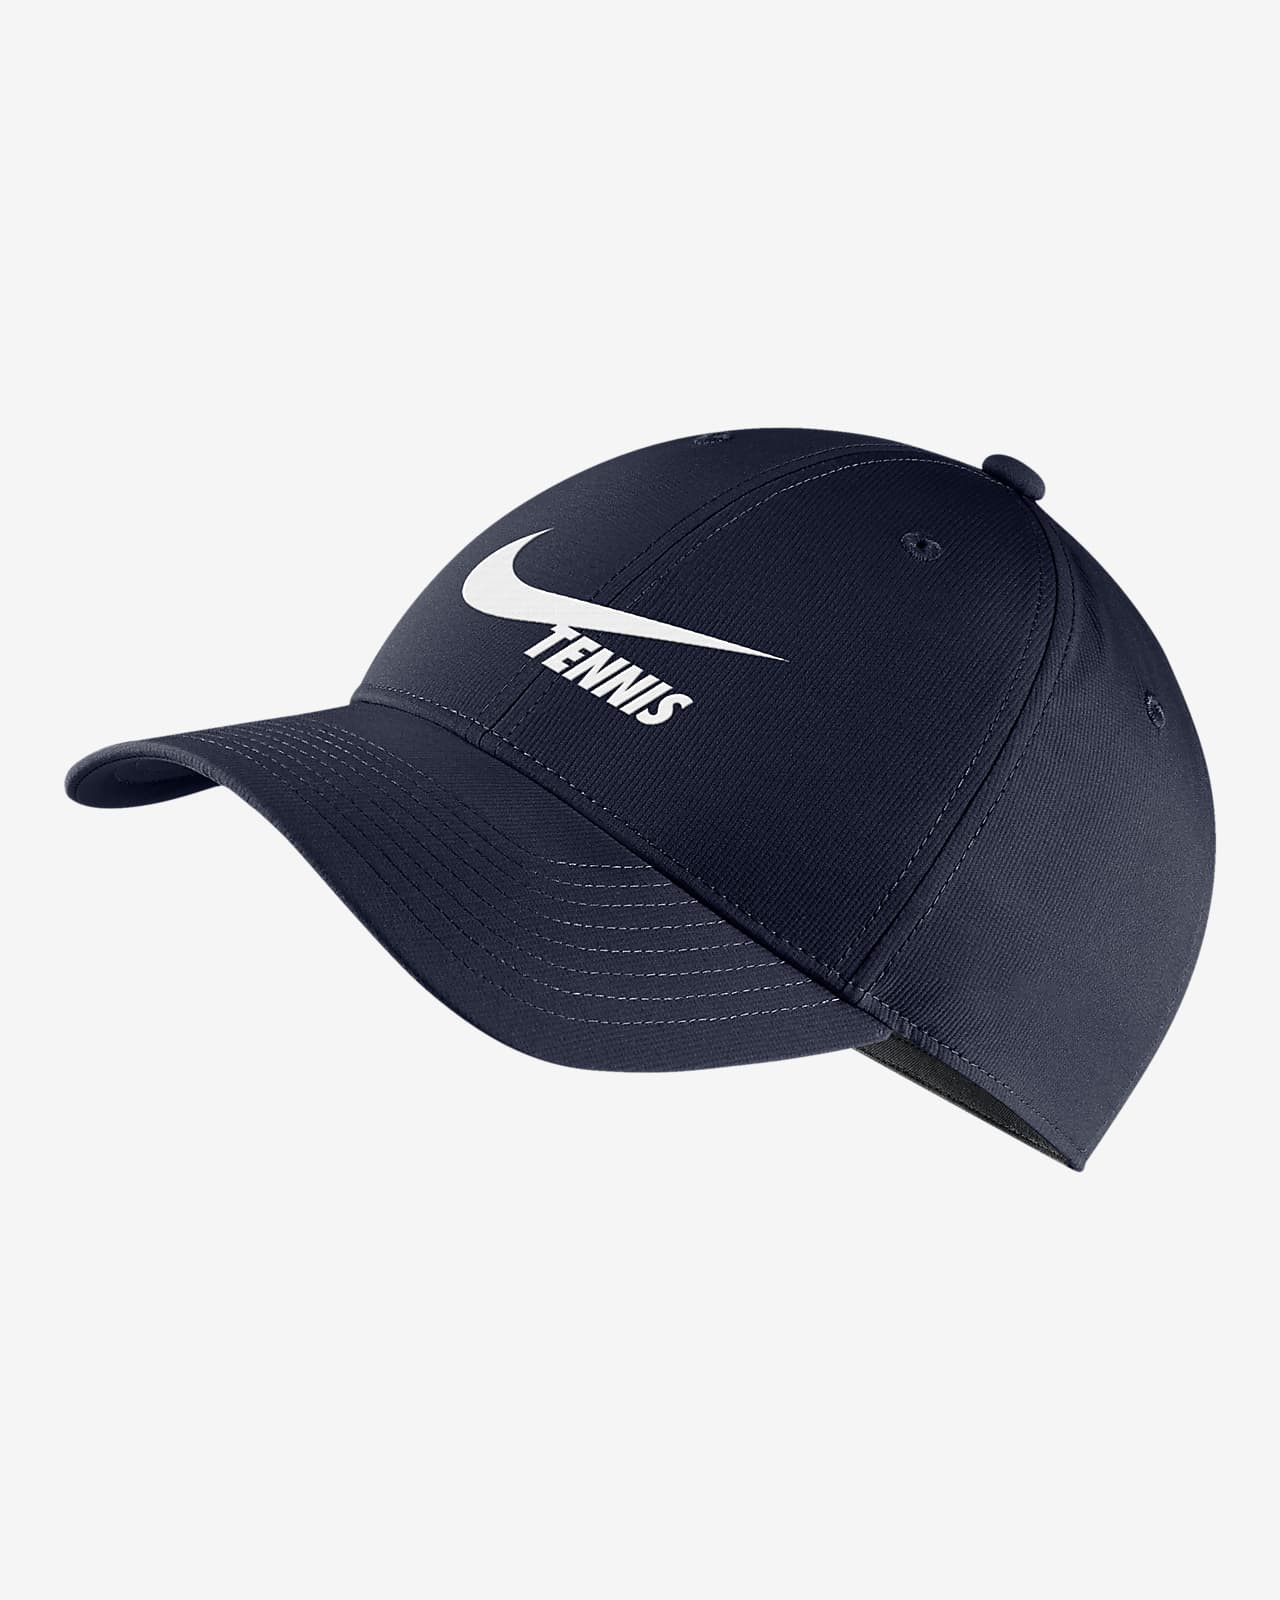 Gorra de Nike Swoosh Legacy91. Nike.com